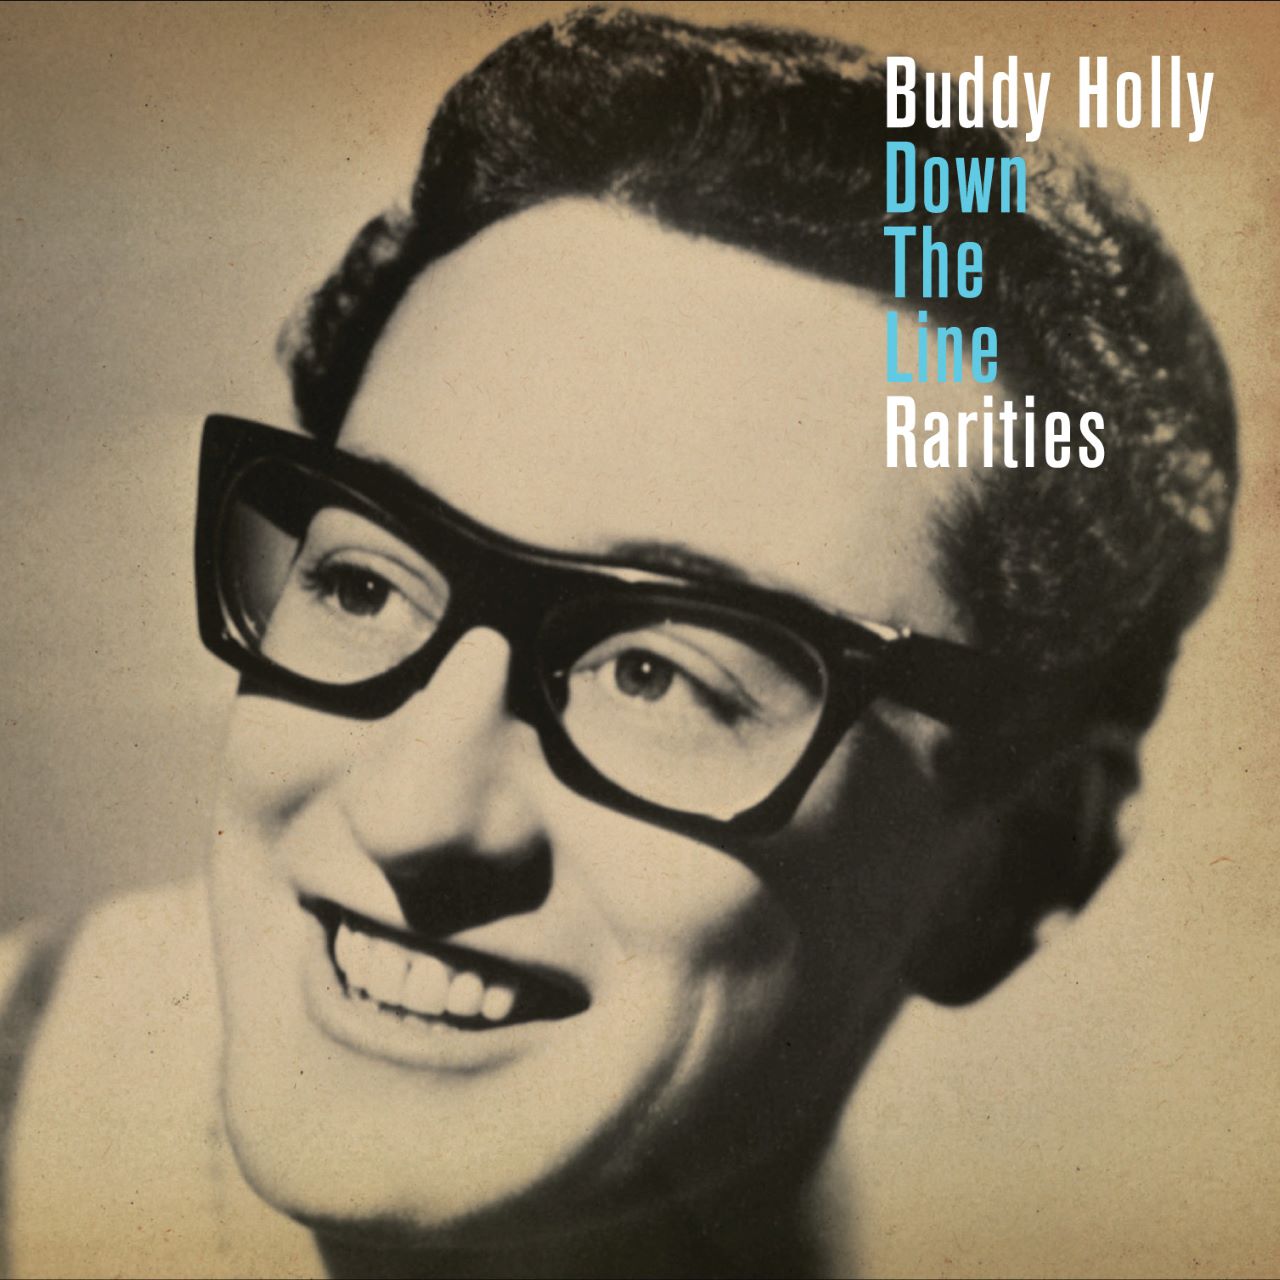 Recensione album di Buddy Holly – “Down The Line Rarities” di Roberto Arioli per la rivista Jamboree n. 65, 2009